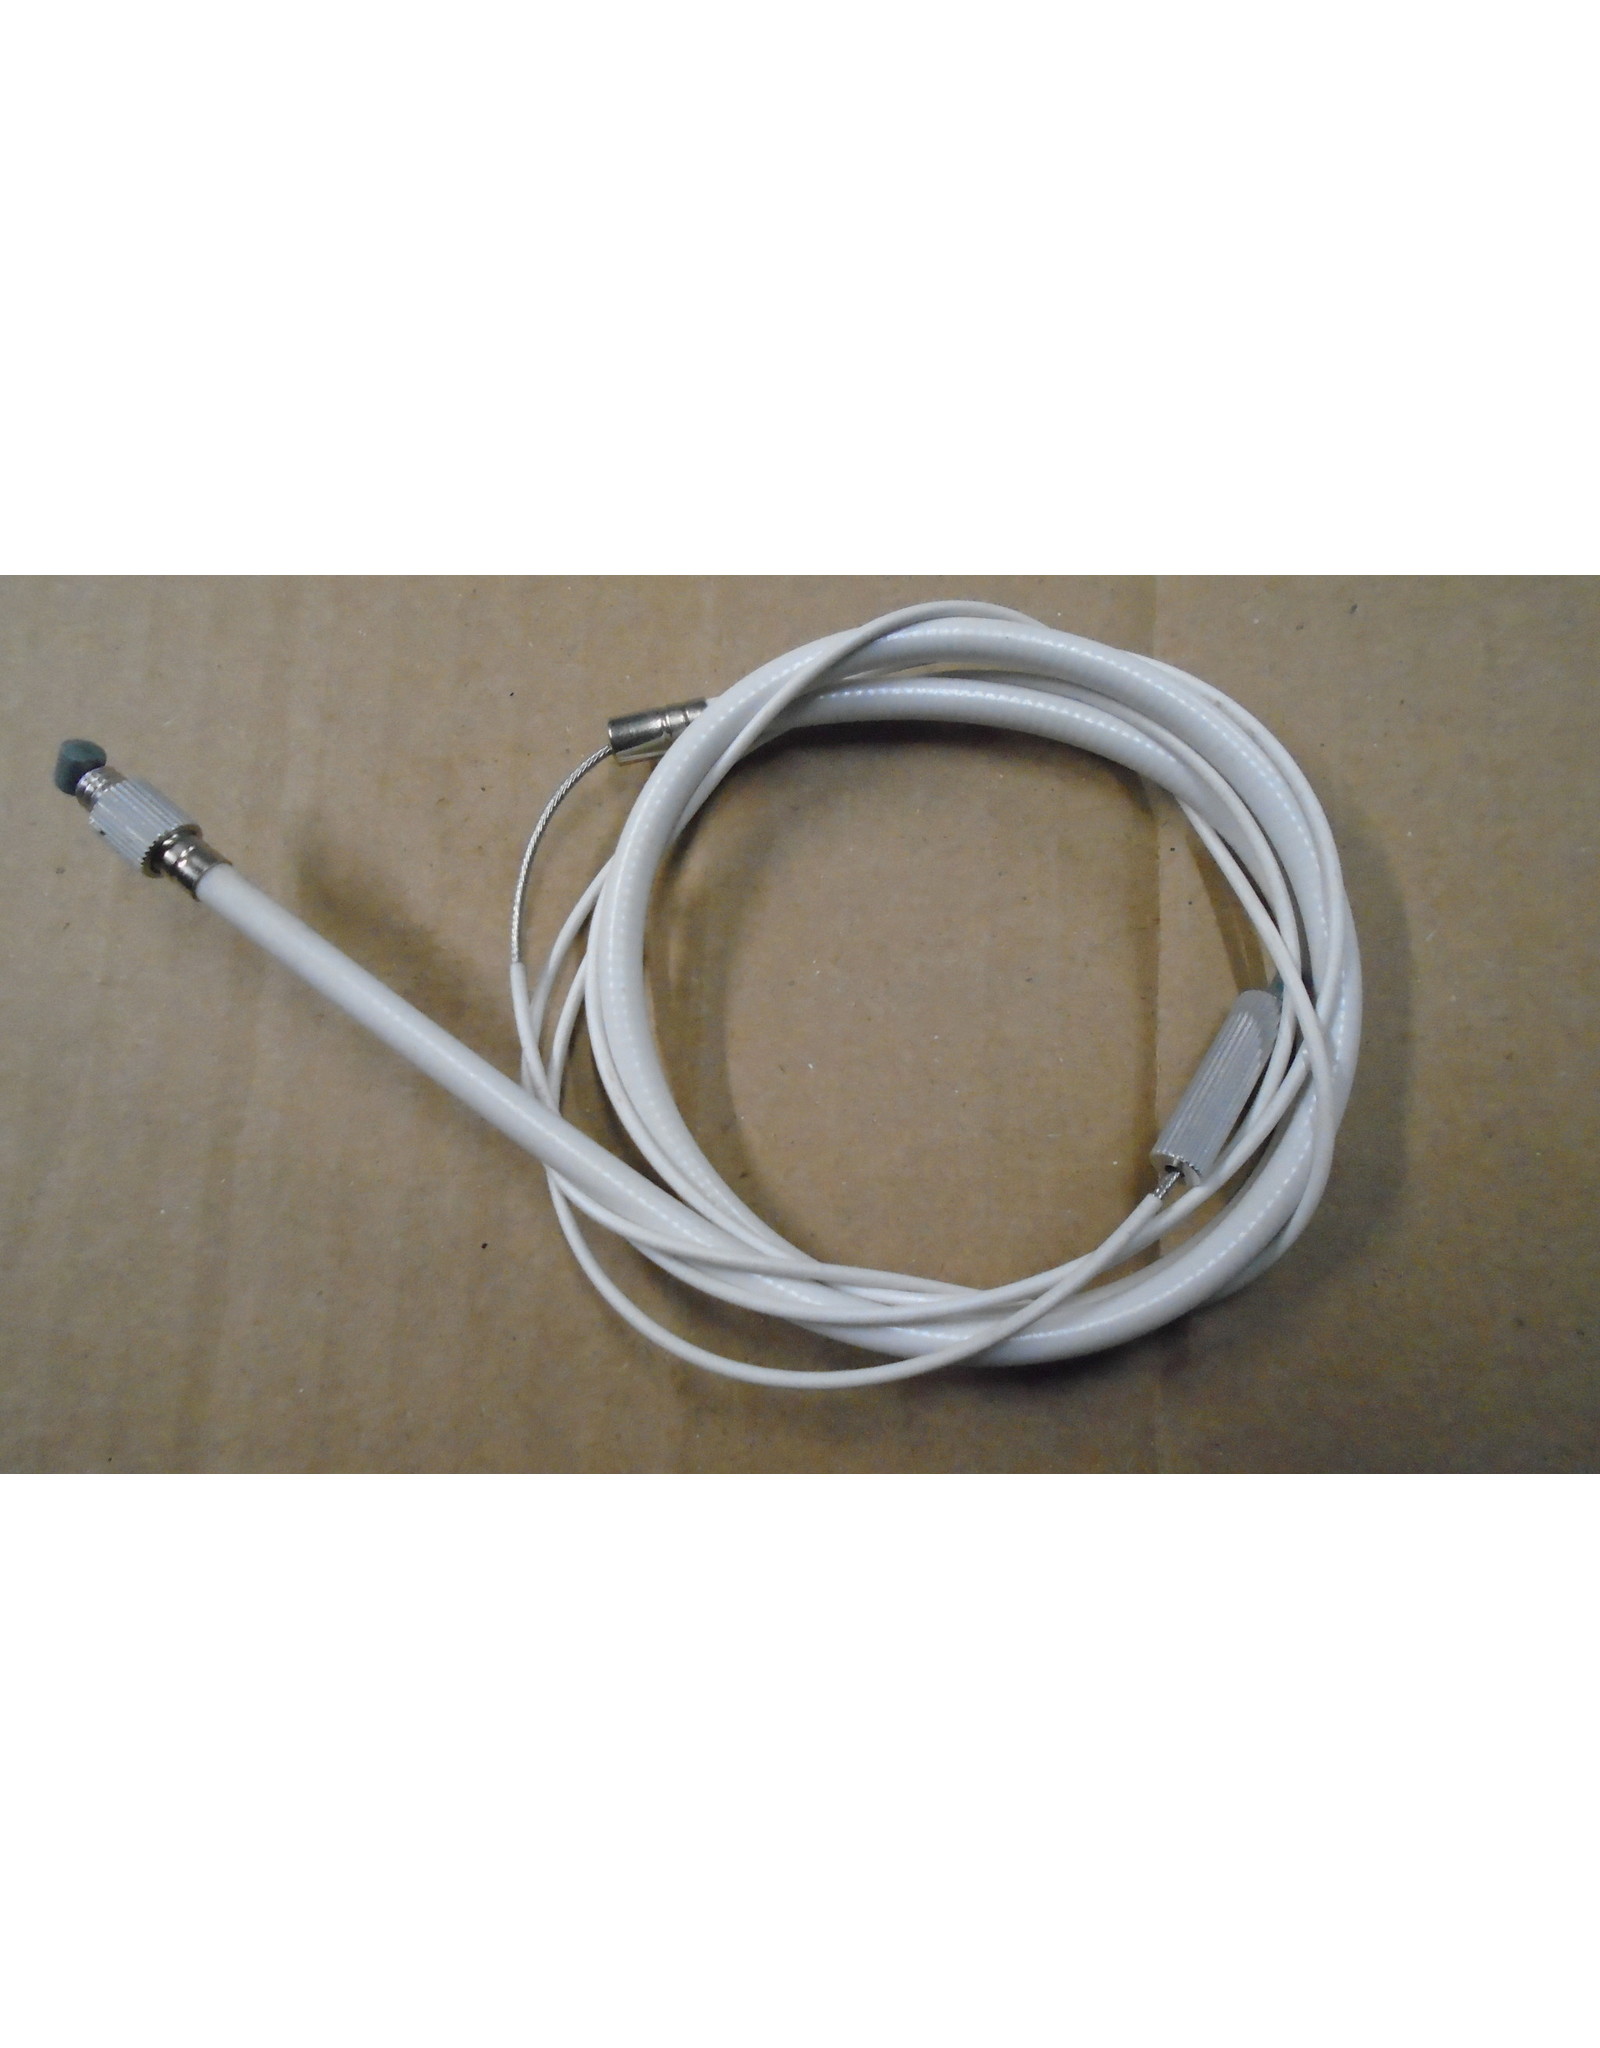 Shimano Simplex - Huret Speed cable